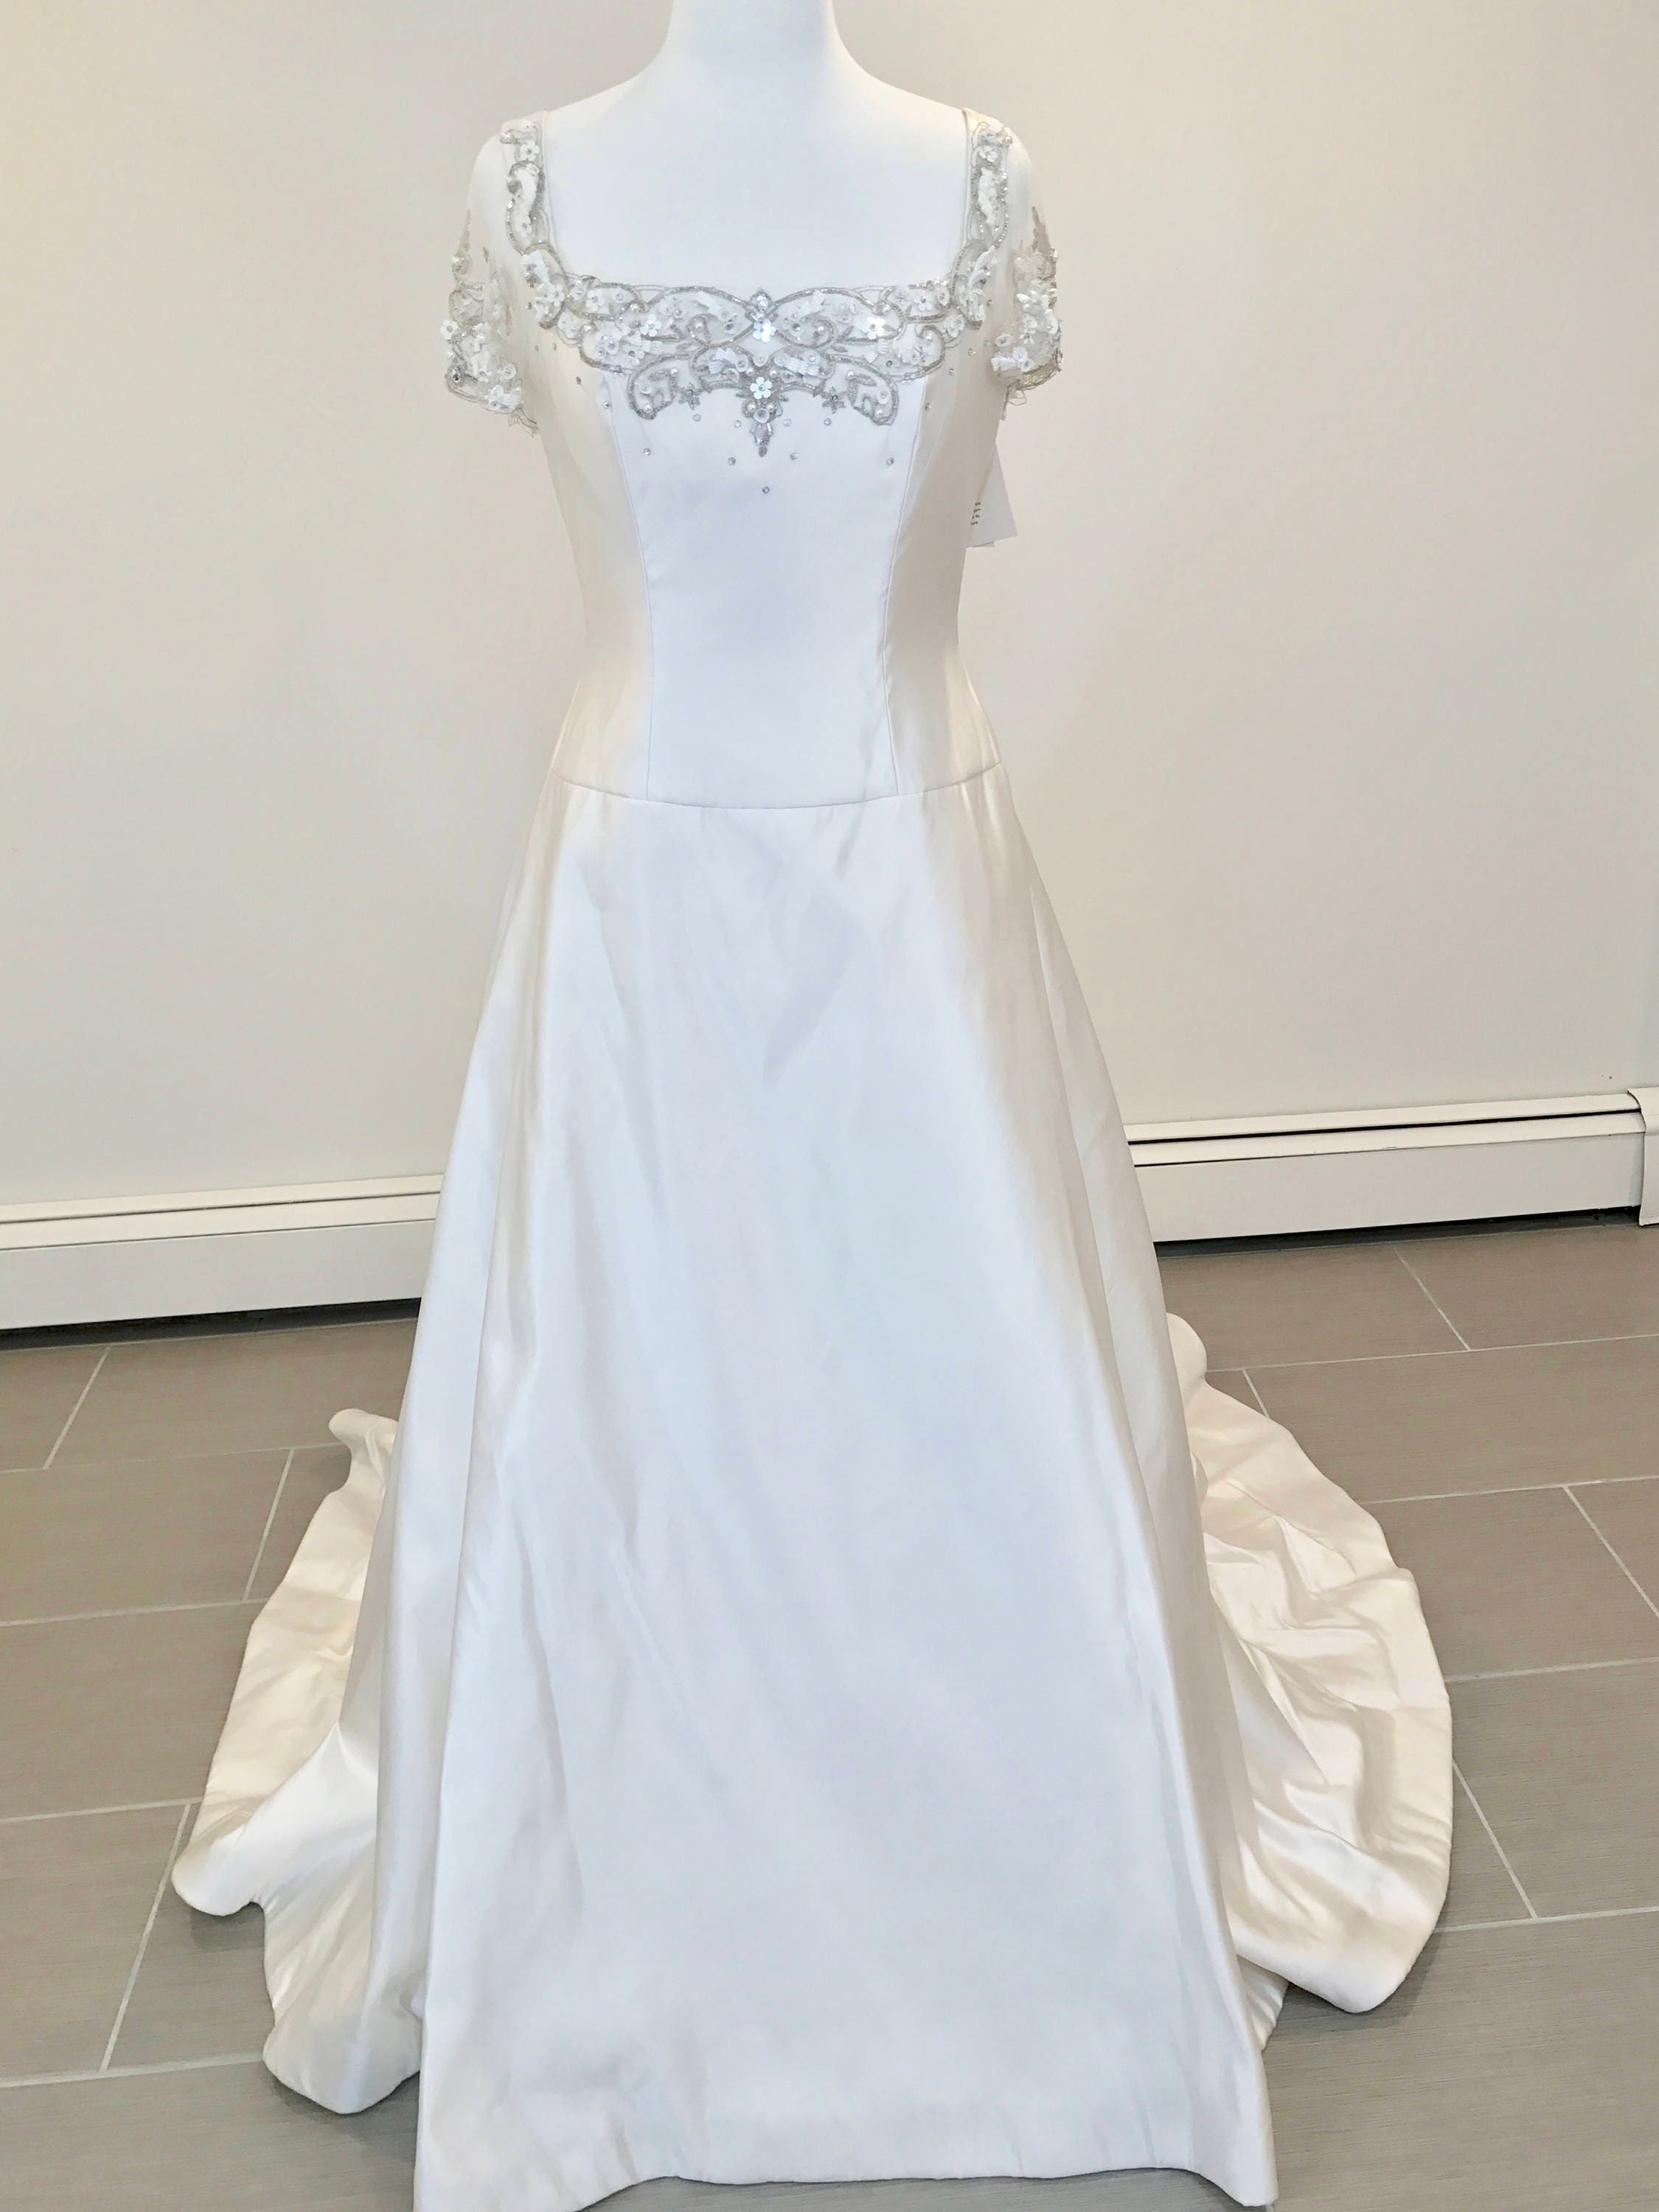 Beautifully designed wedding dress by Givenchy size 8 | Etsy